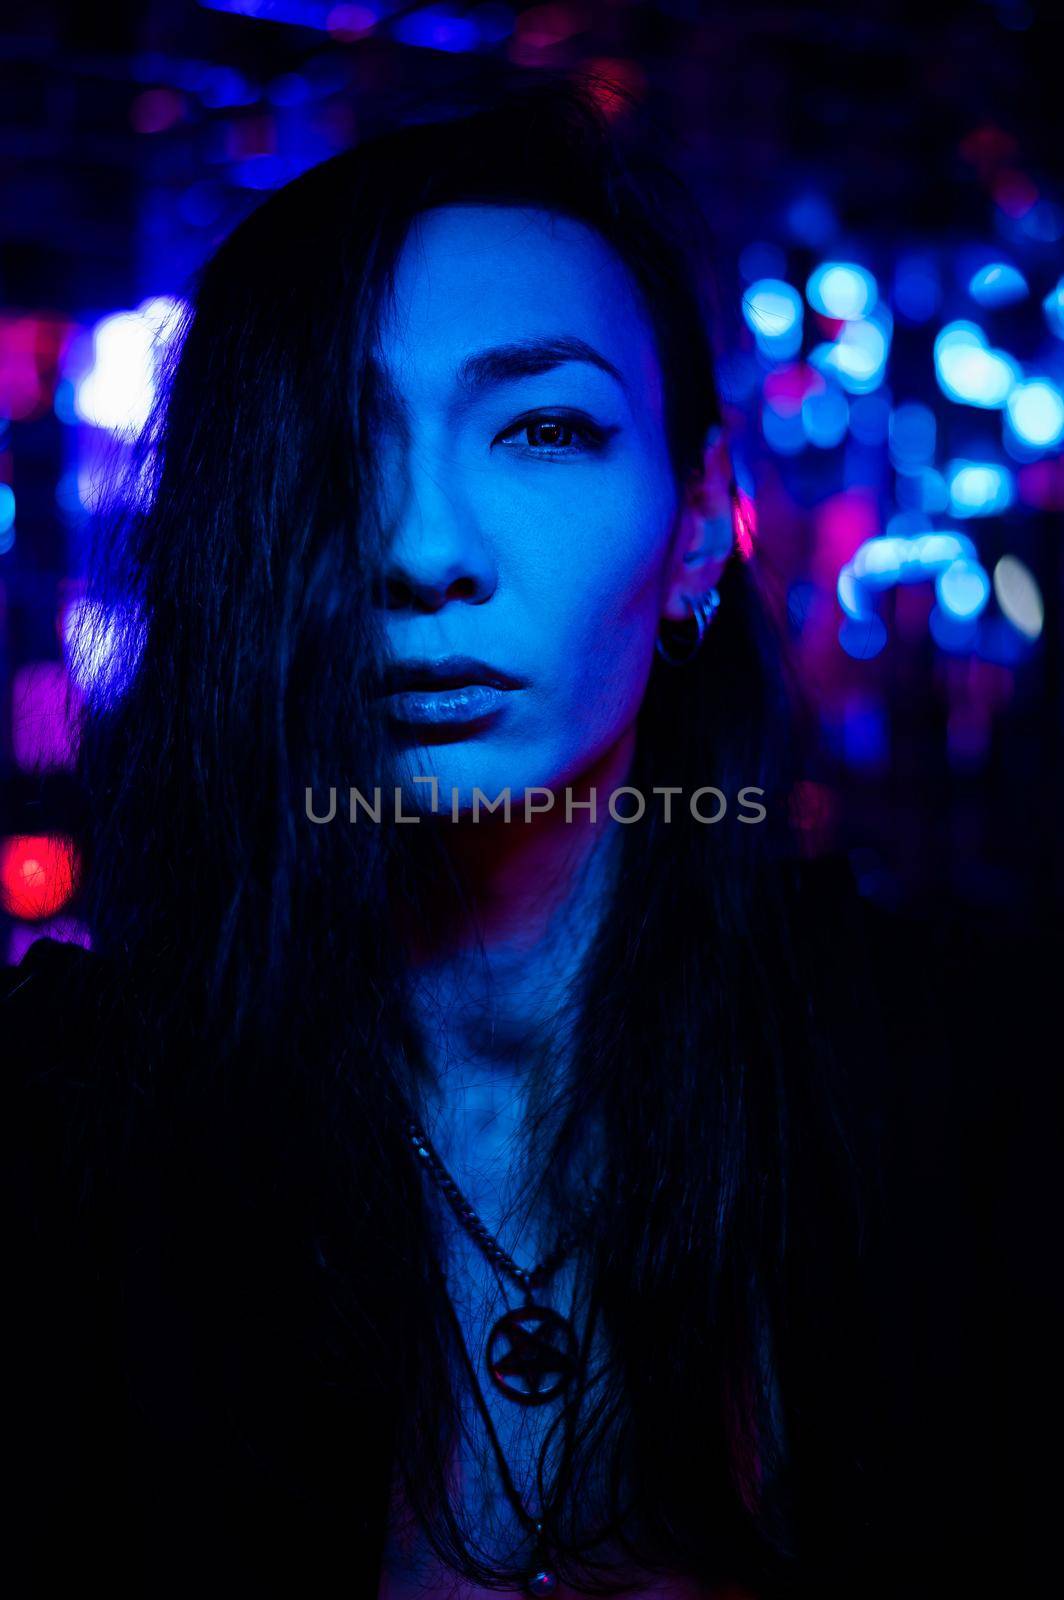 Portrait of a transgender model in a studio with neon lighting